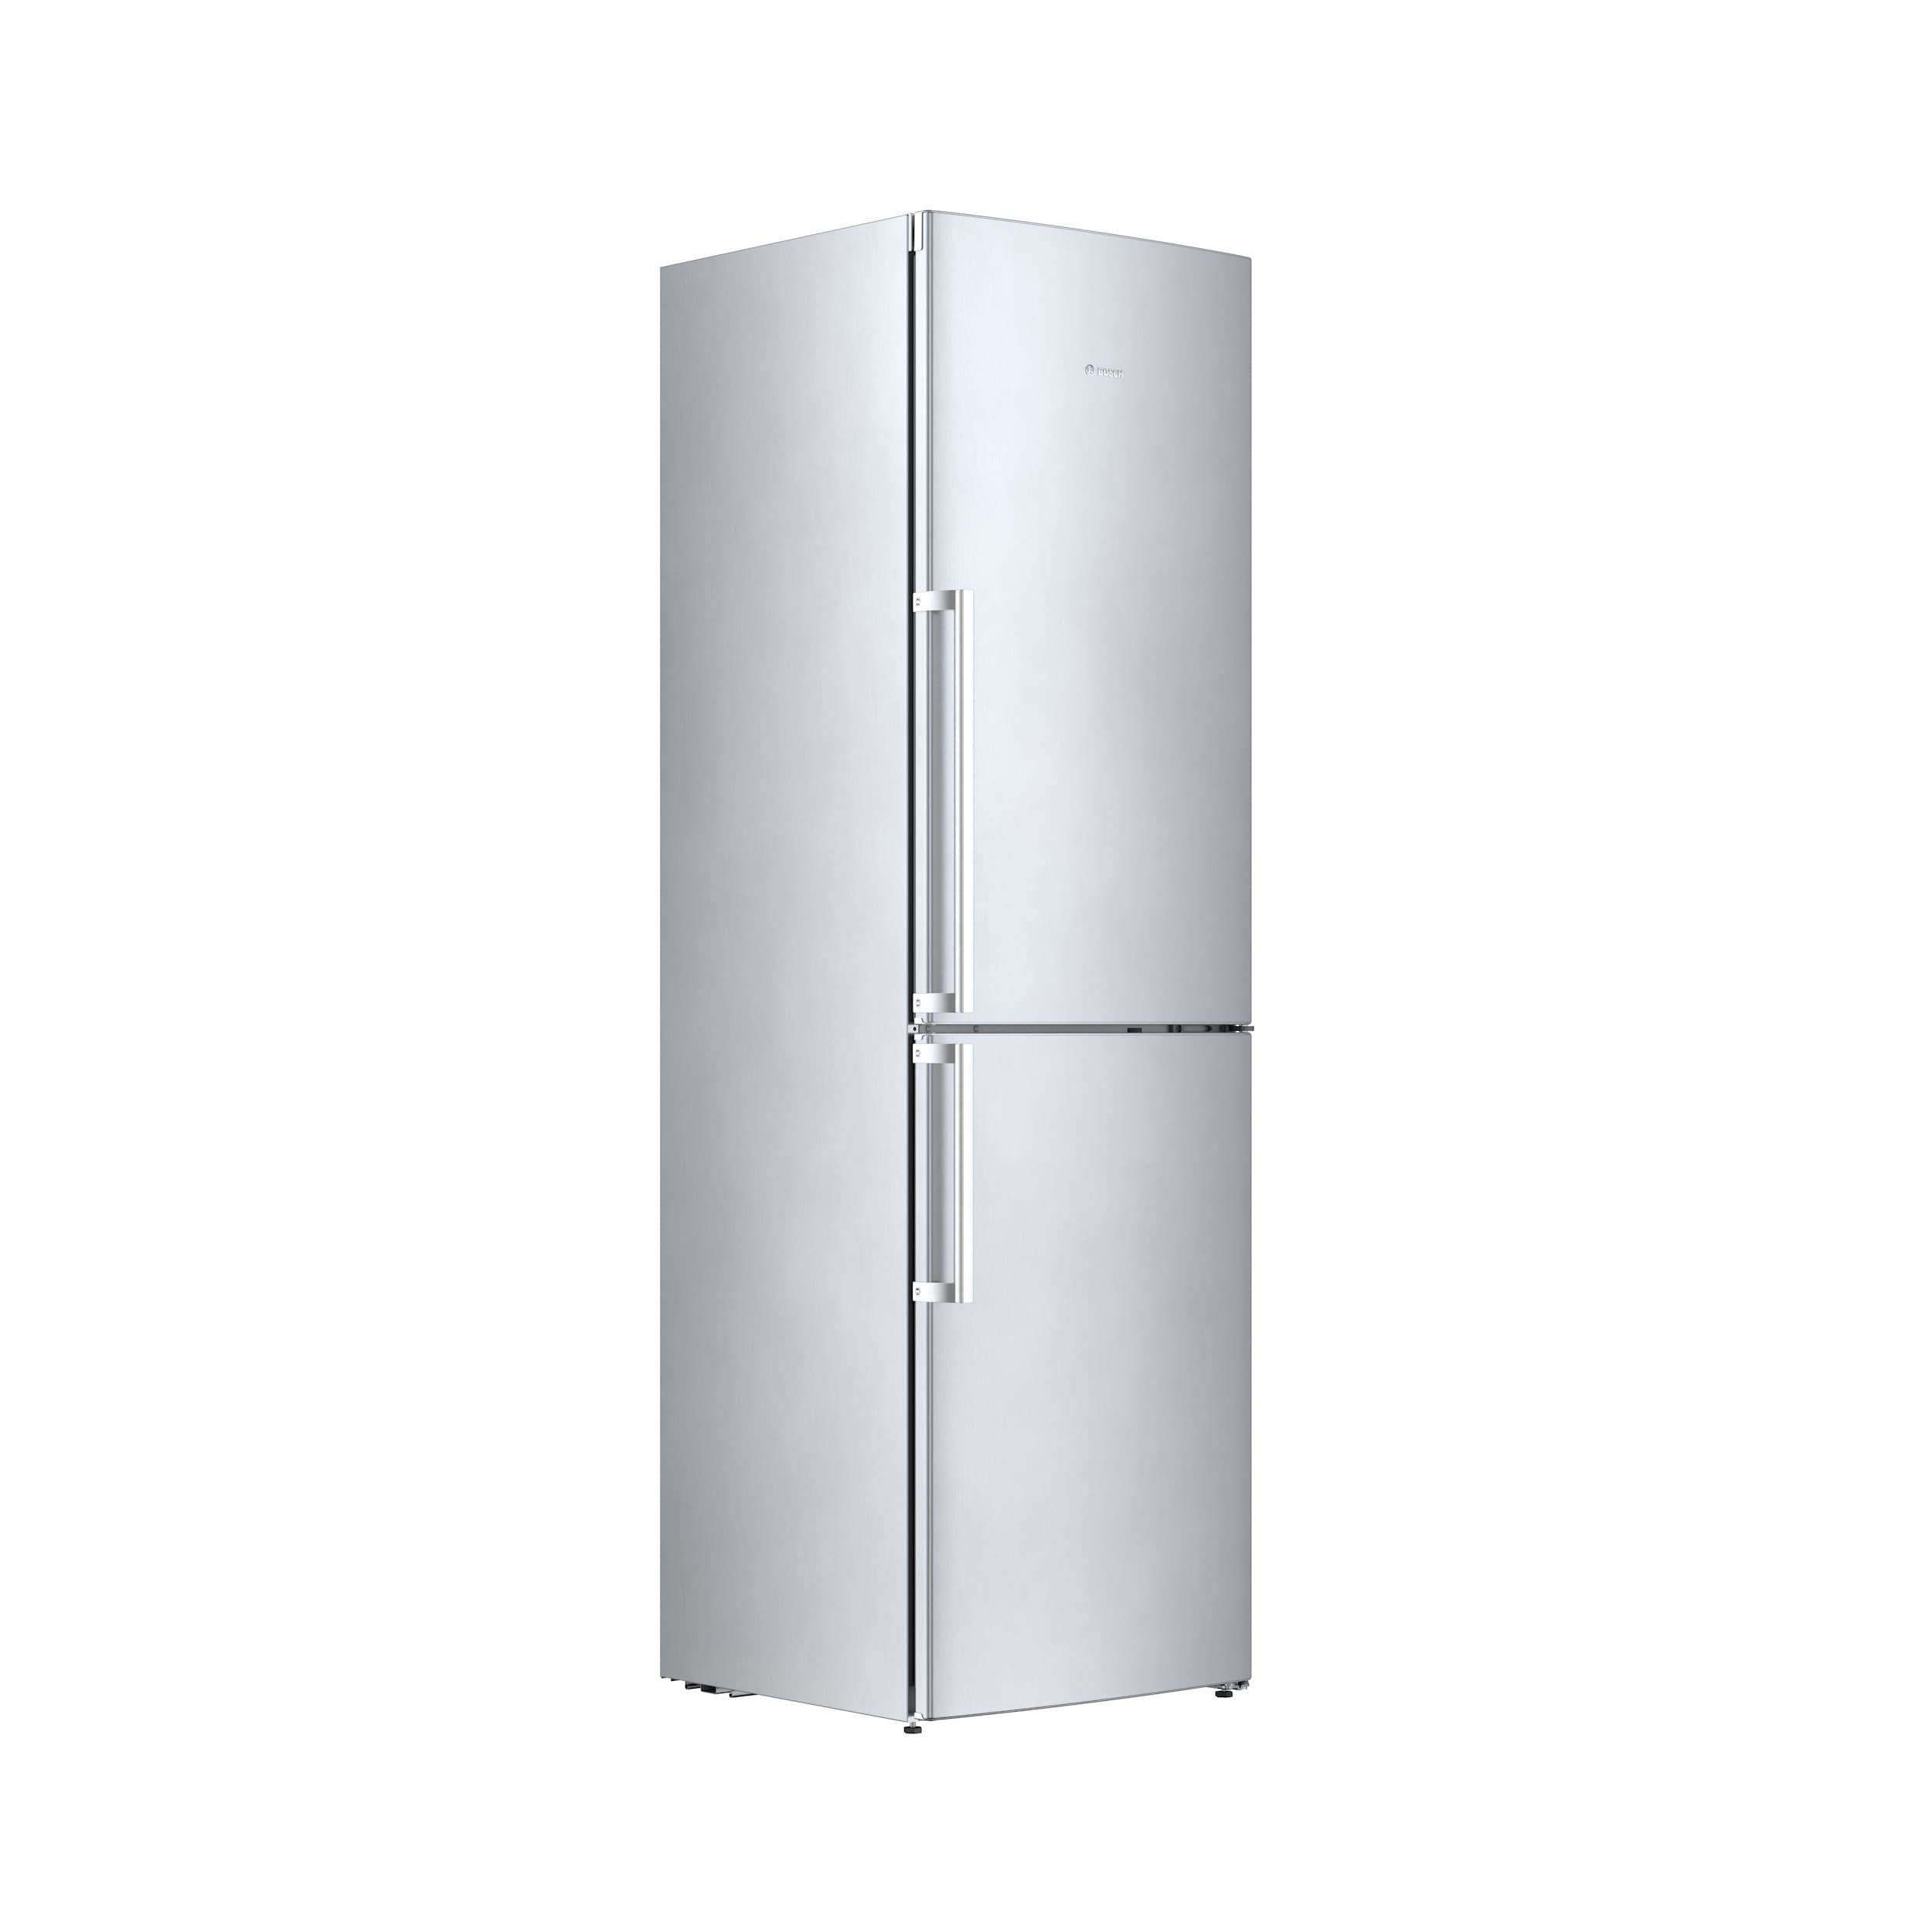 BOSCH White Fridge Freezer Refrigerator Door Handle Grab Bar Spare Pack of 2 